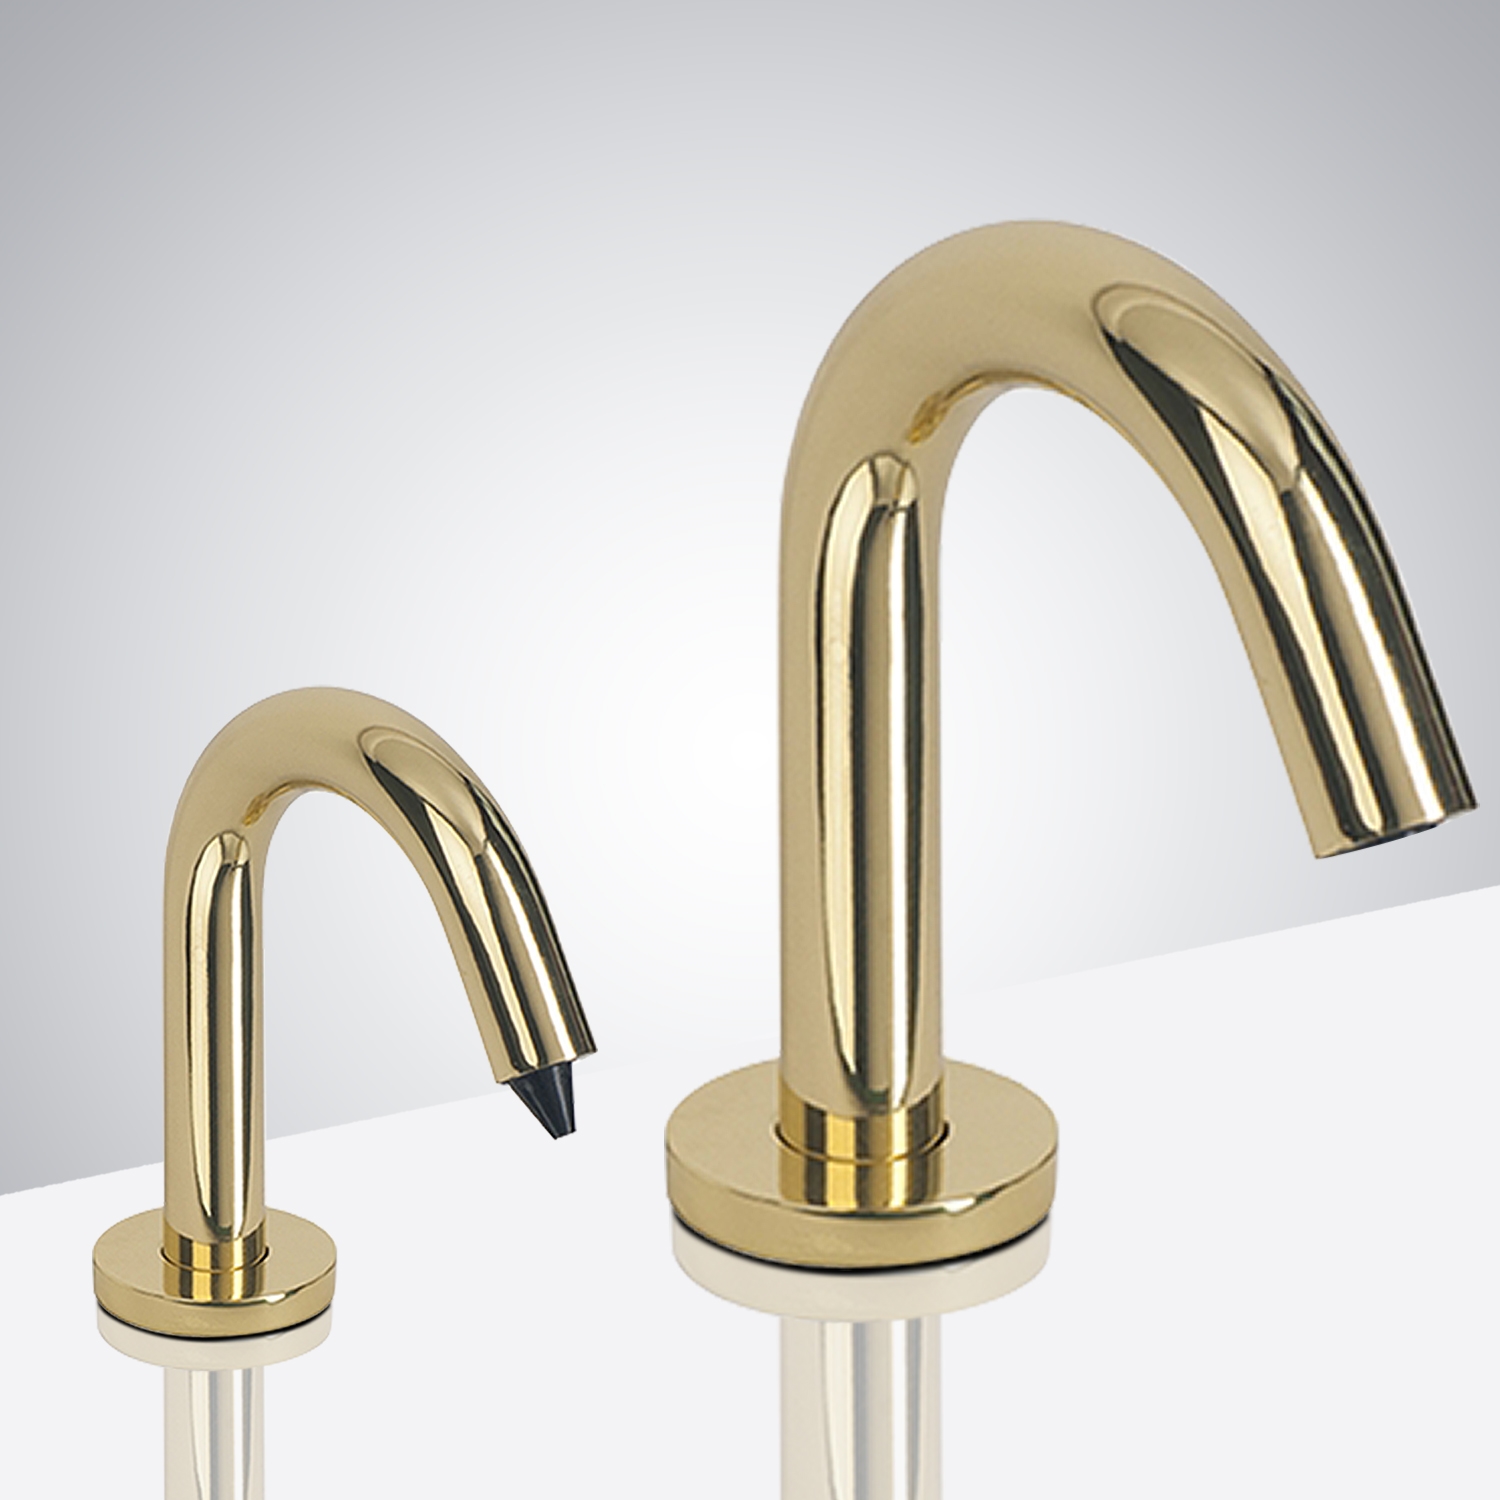 DUPLICATE Fontana Sénart Motion Sensor Faucet & Automatic Soap Dispenser for Restrooms in Gold Finish